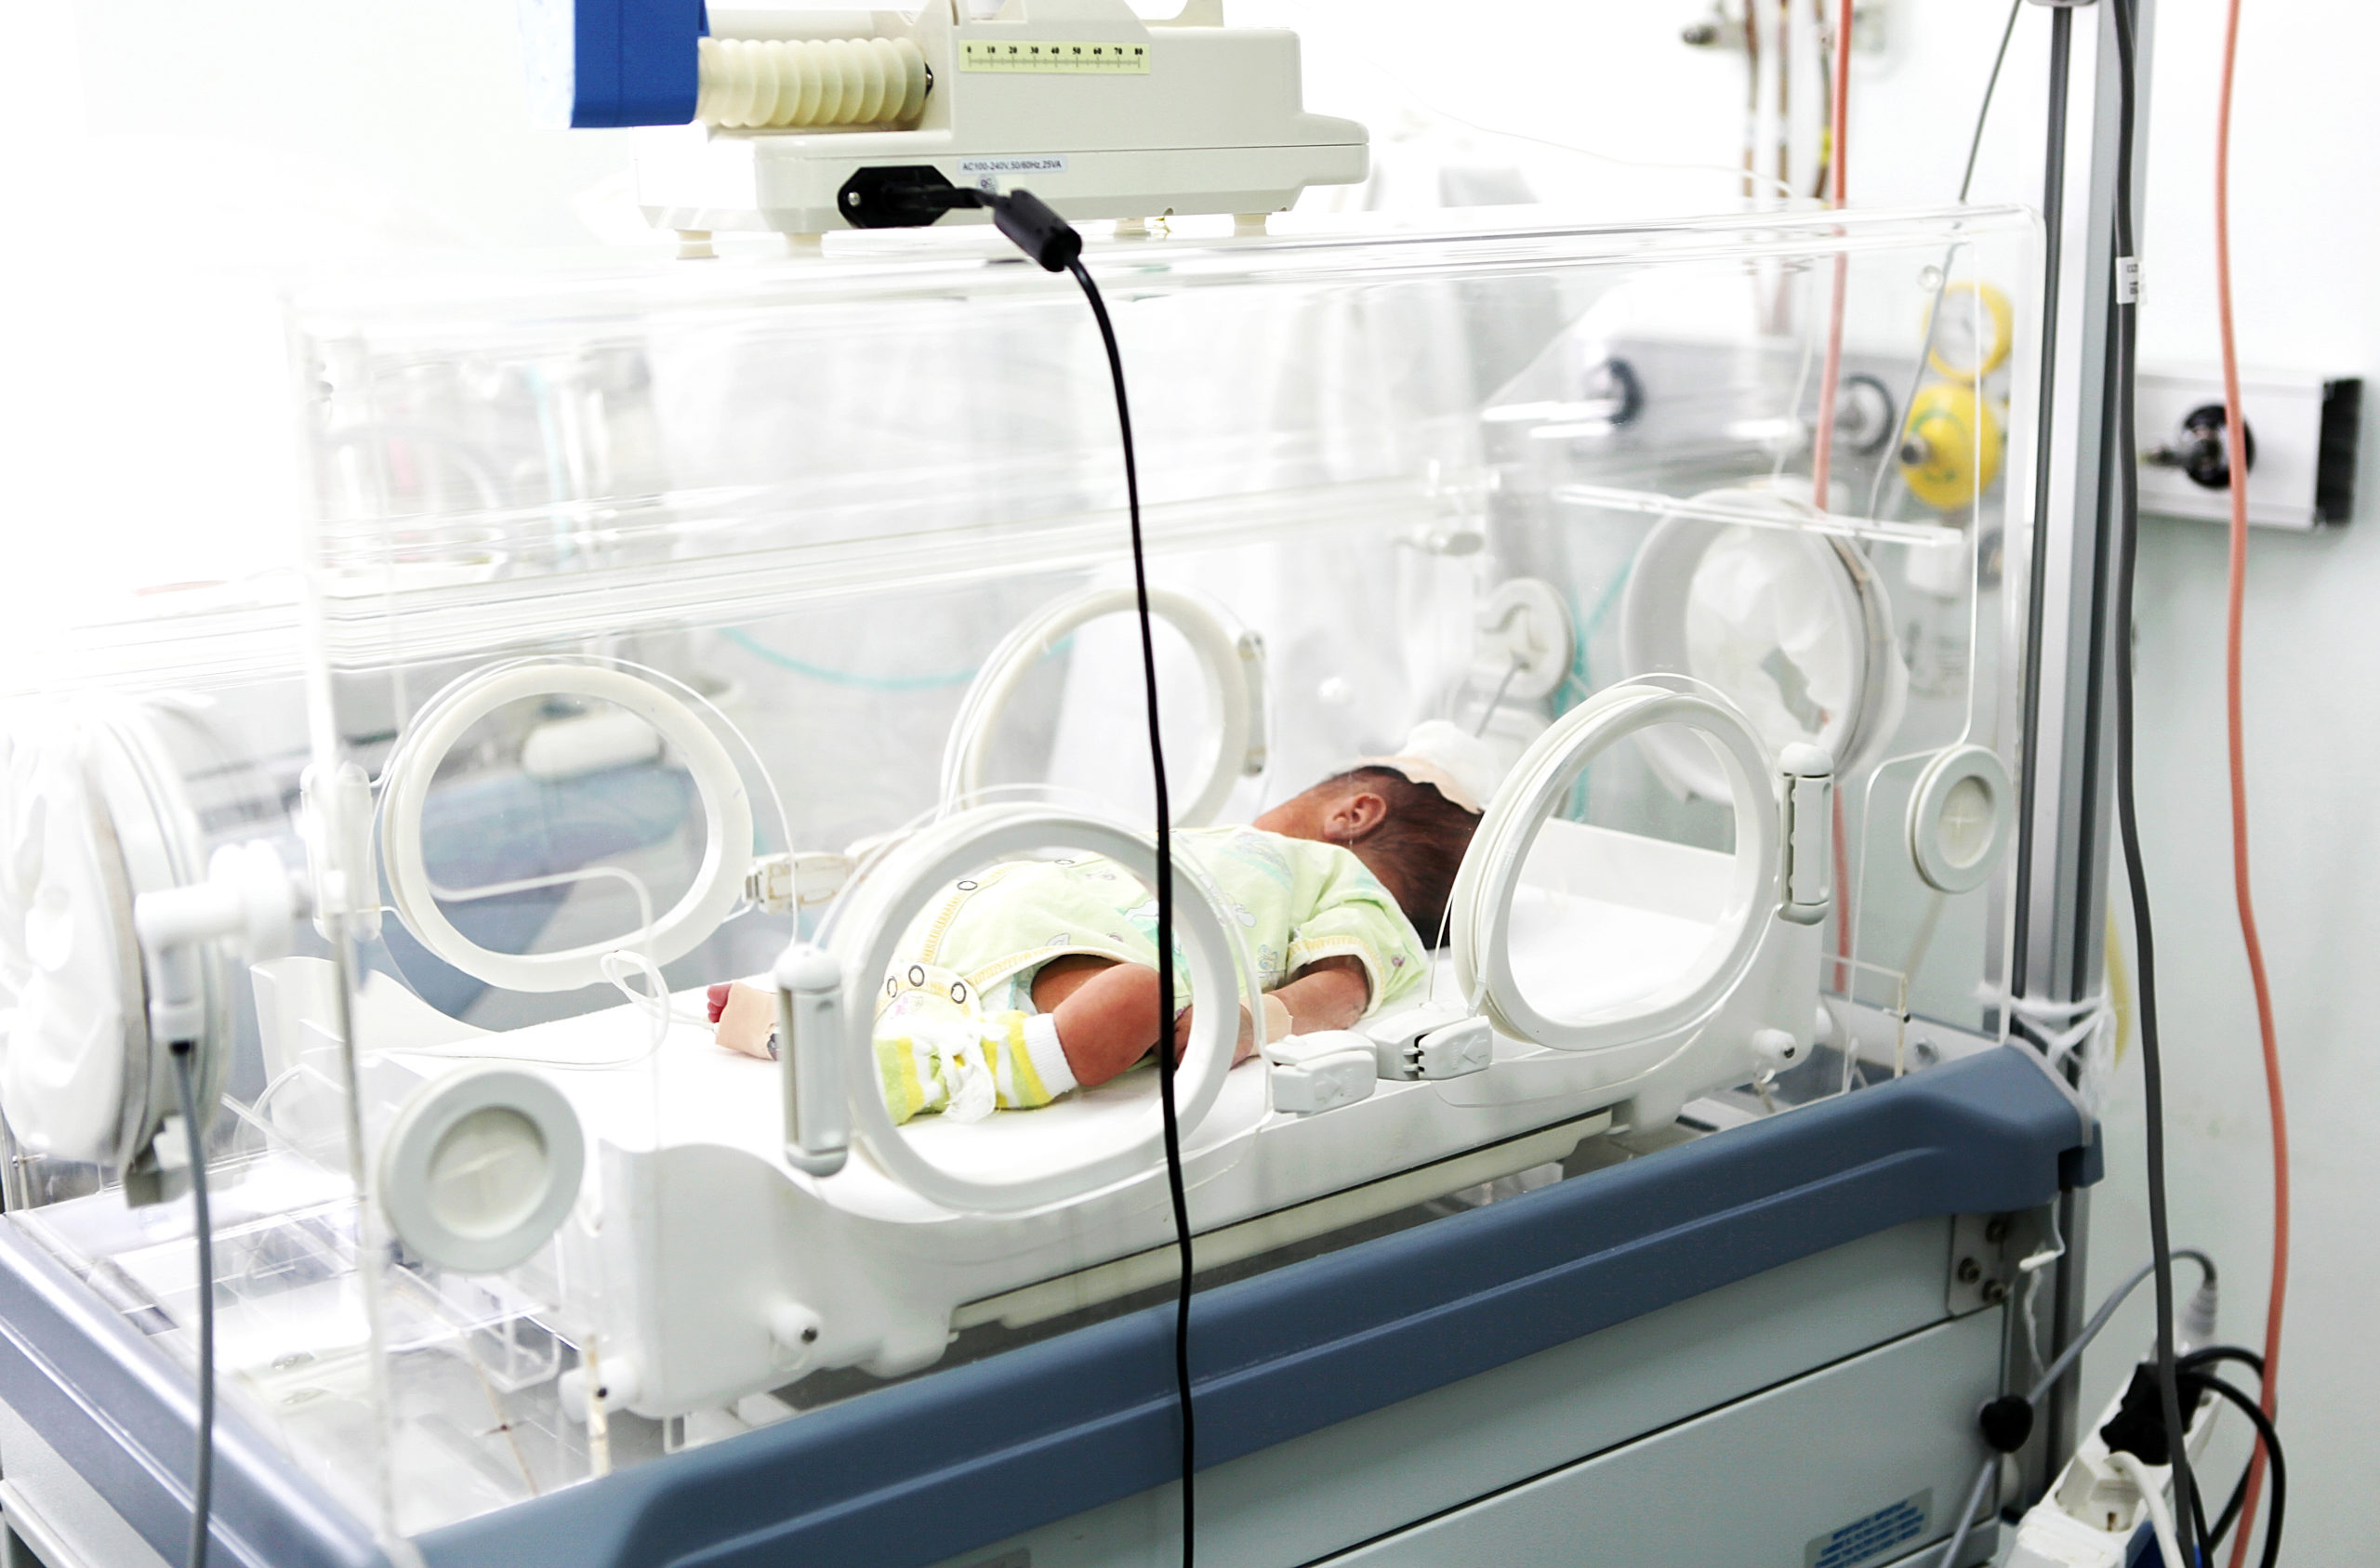 NICU - Neonatal intensive care unit